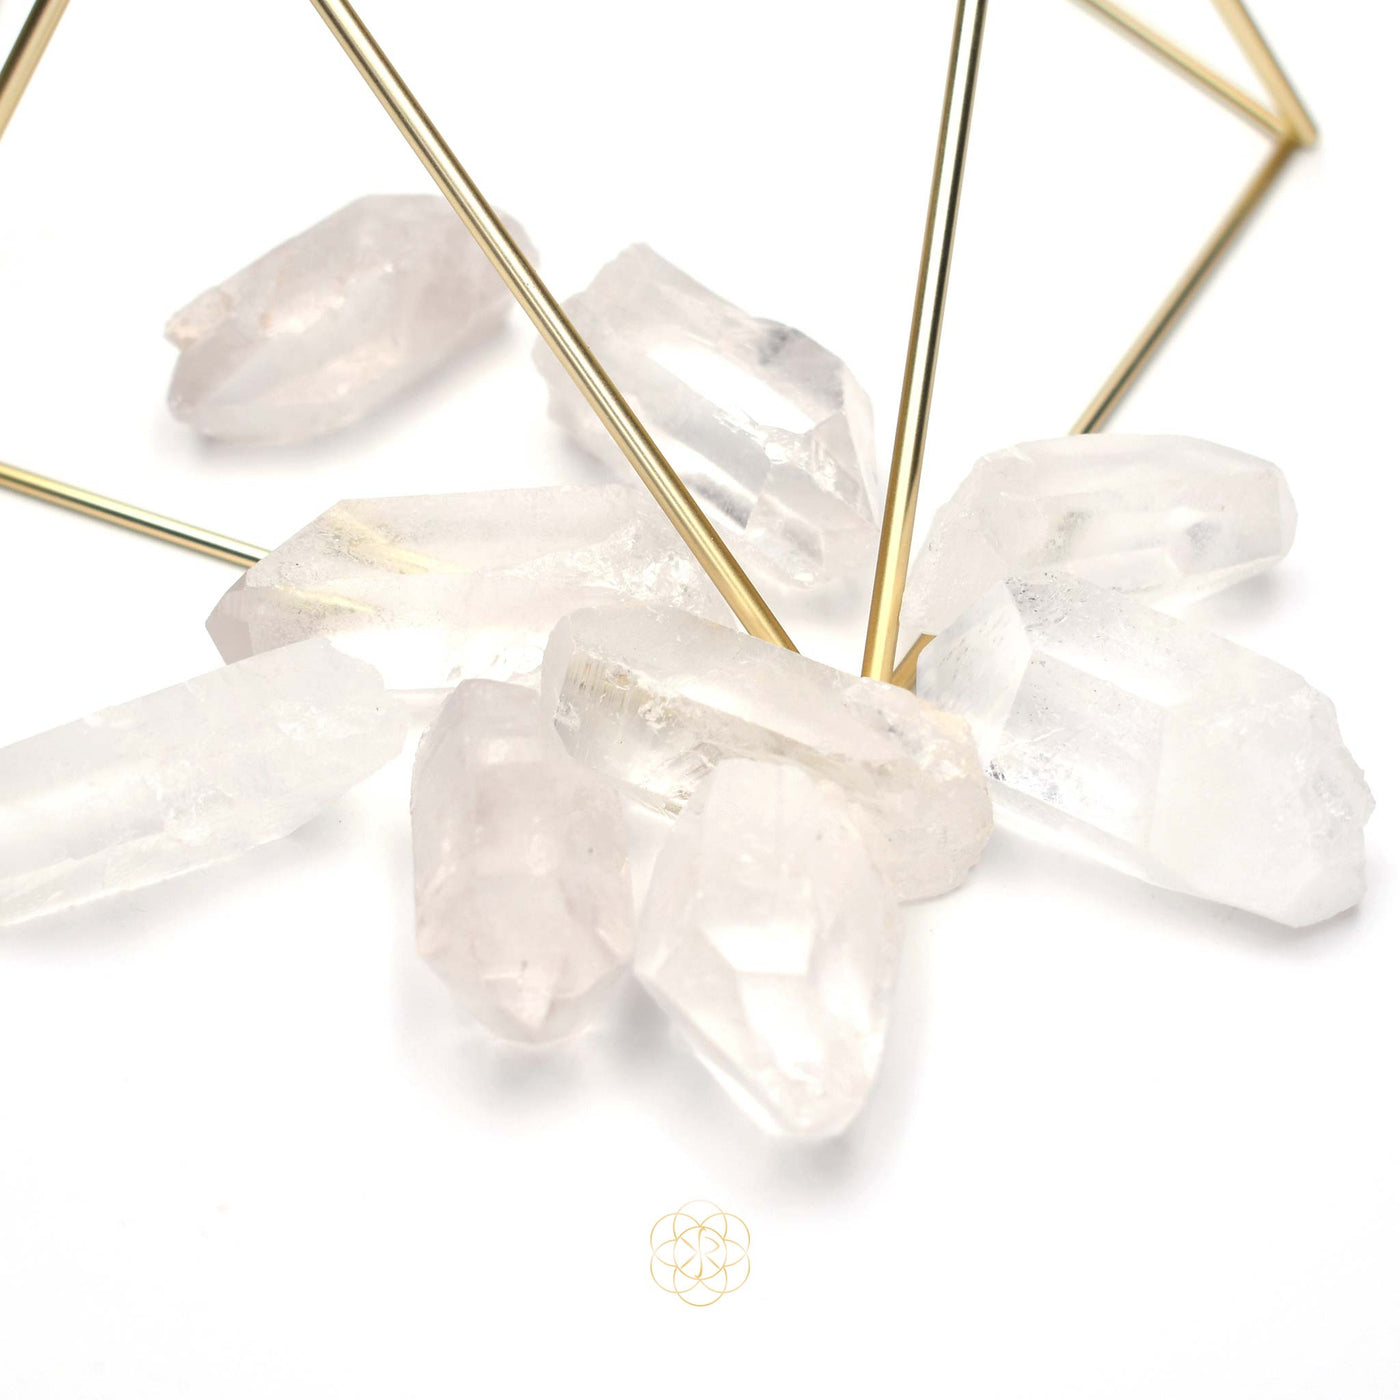 Shop White/Clear Crystals | Kim R Sanchez Jewelry